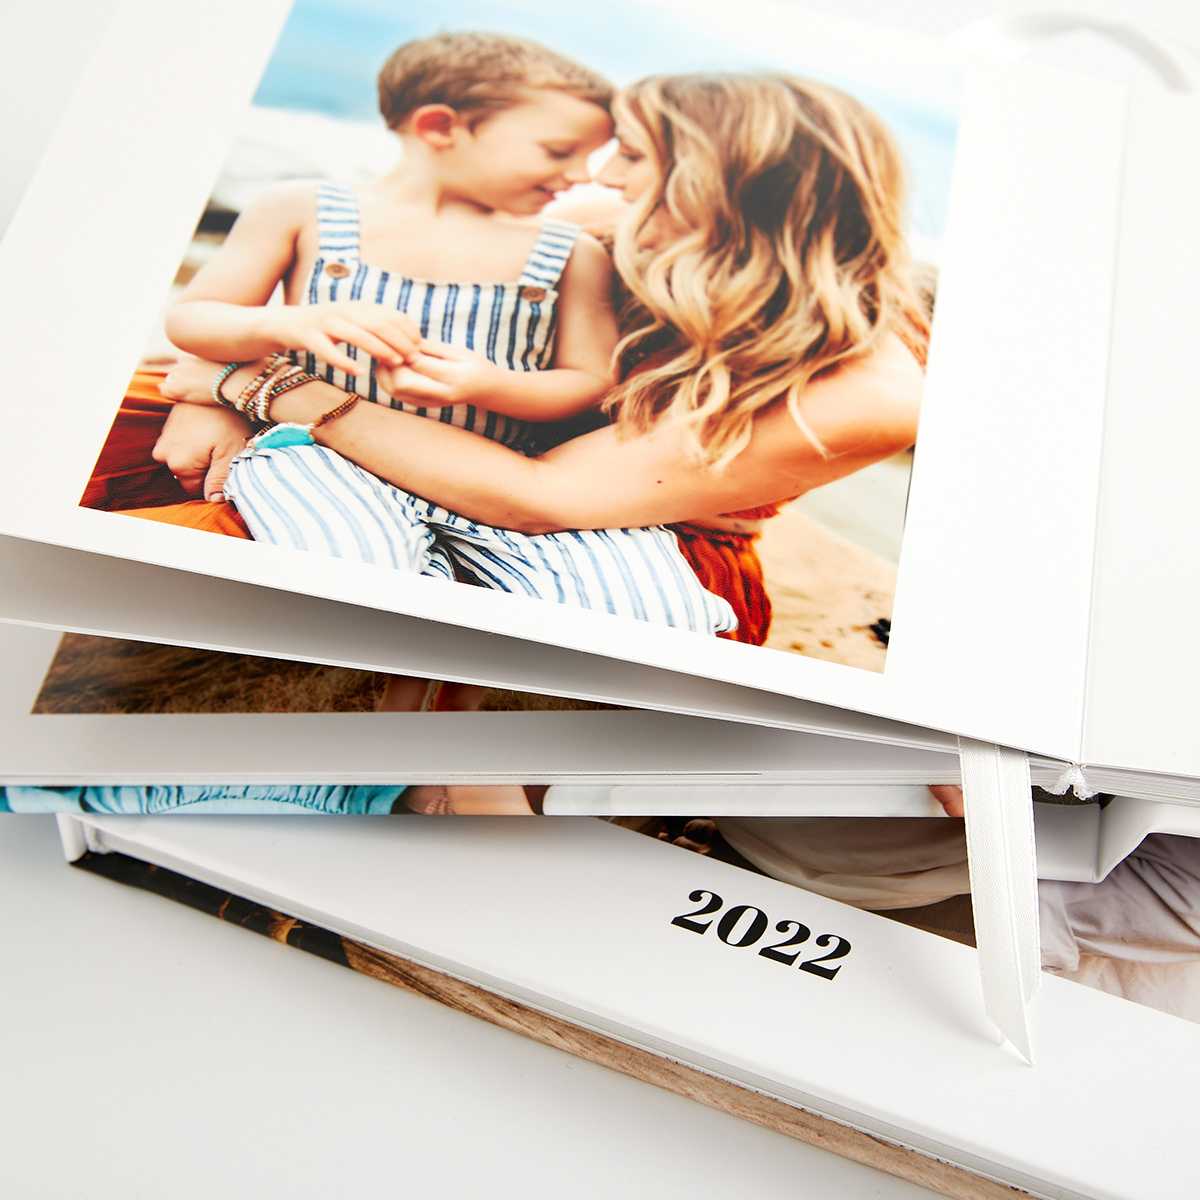 Kids photos on inexpensive layflat photo book